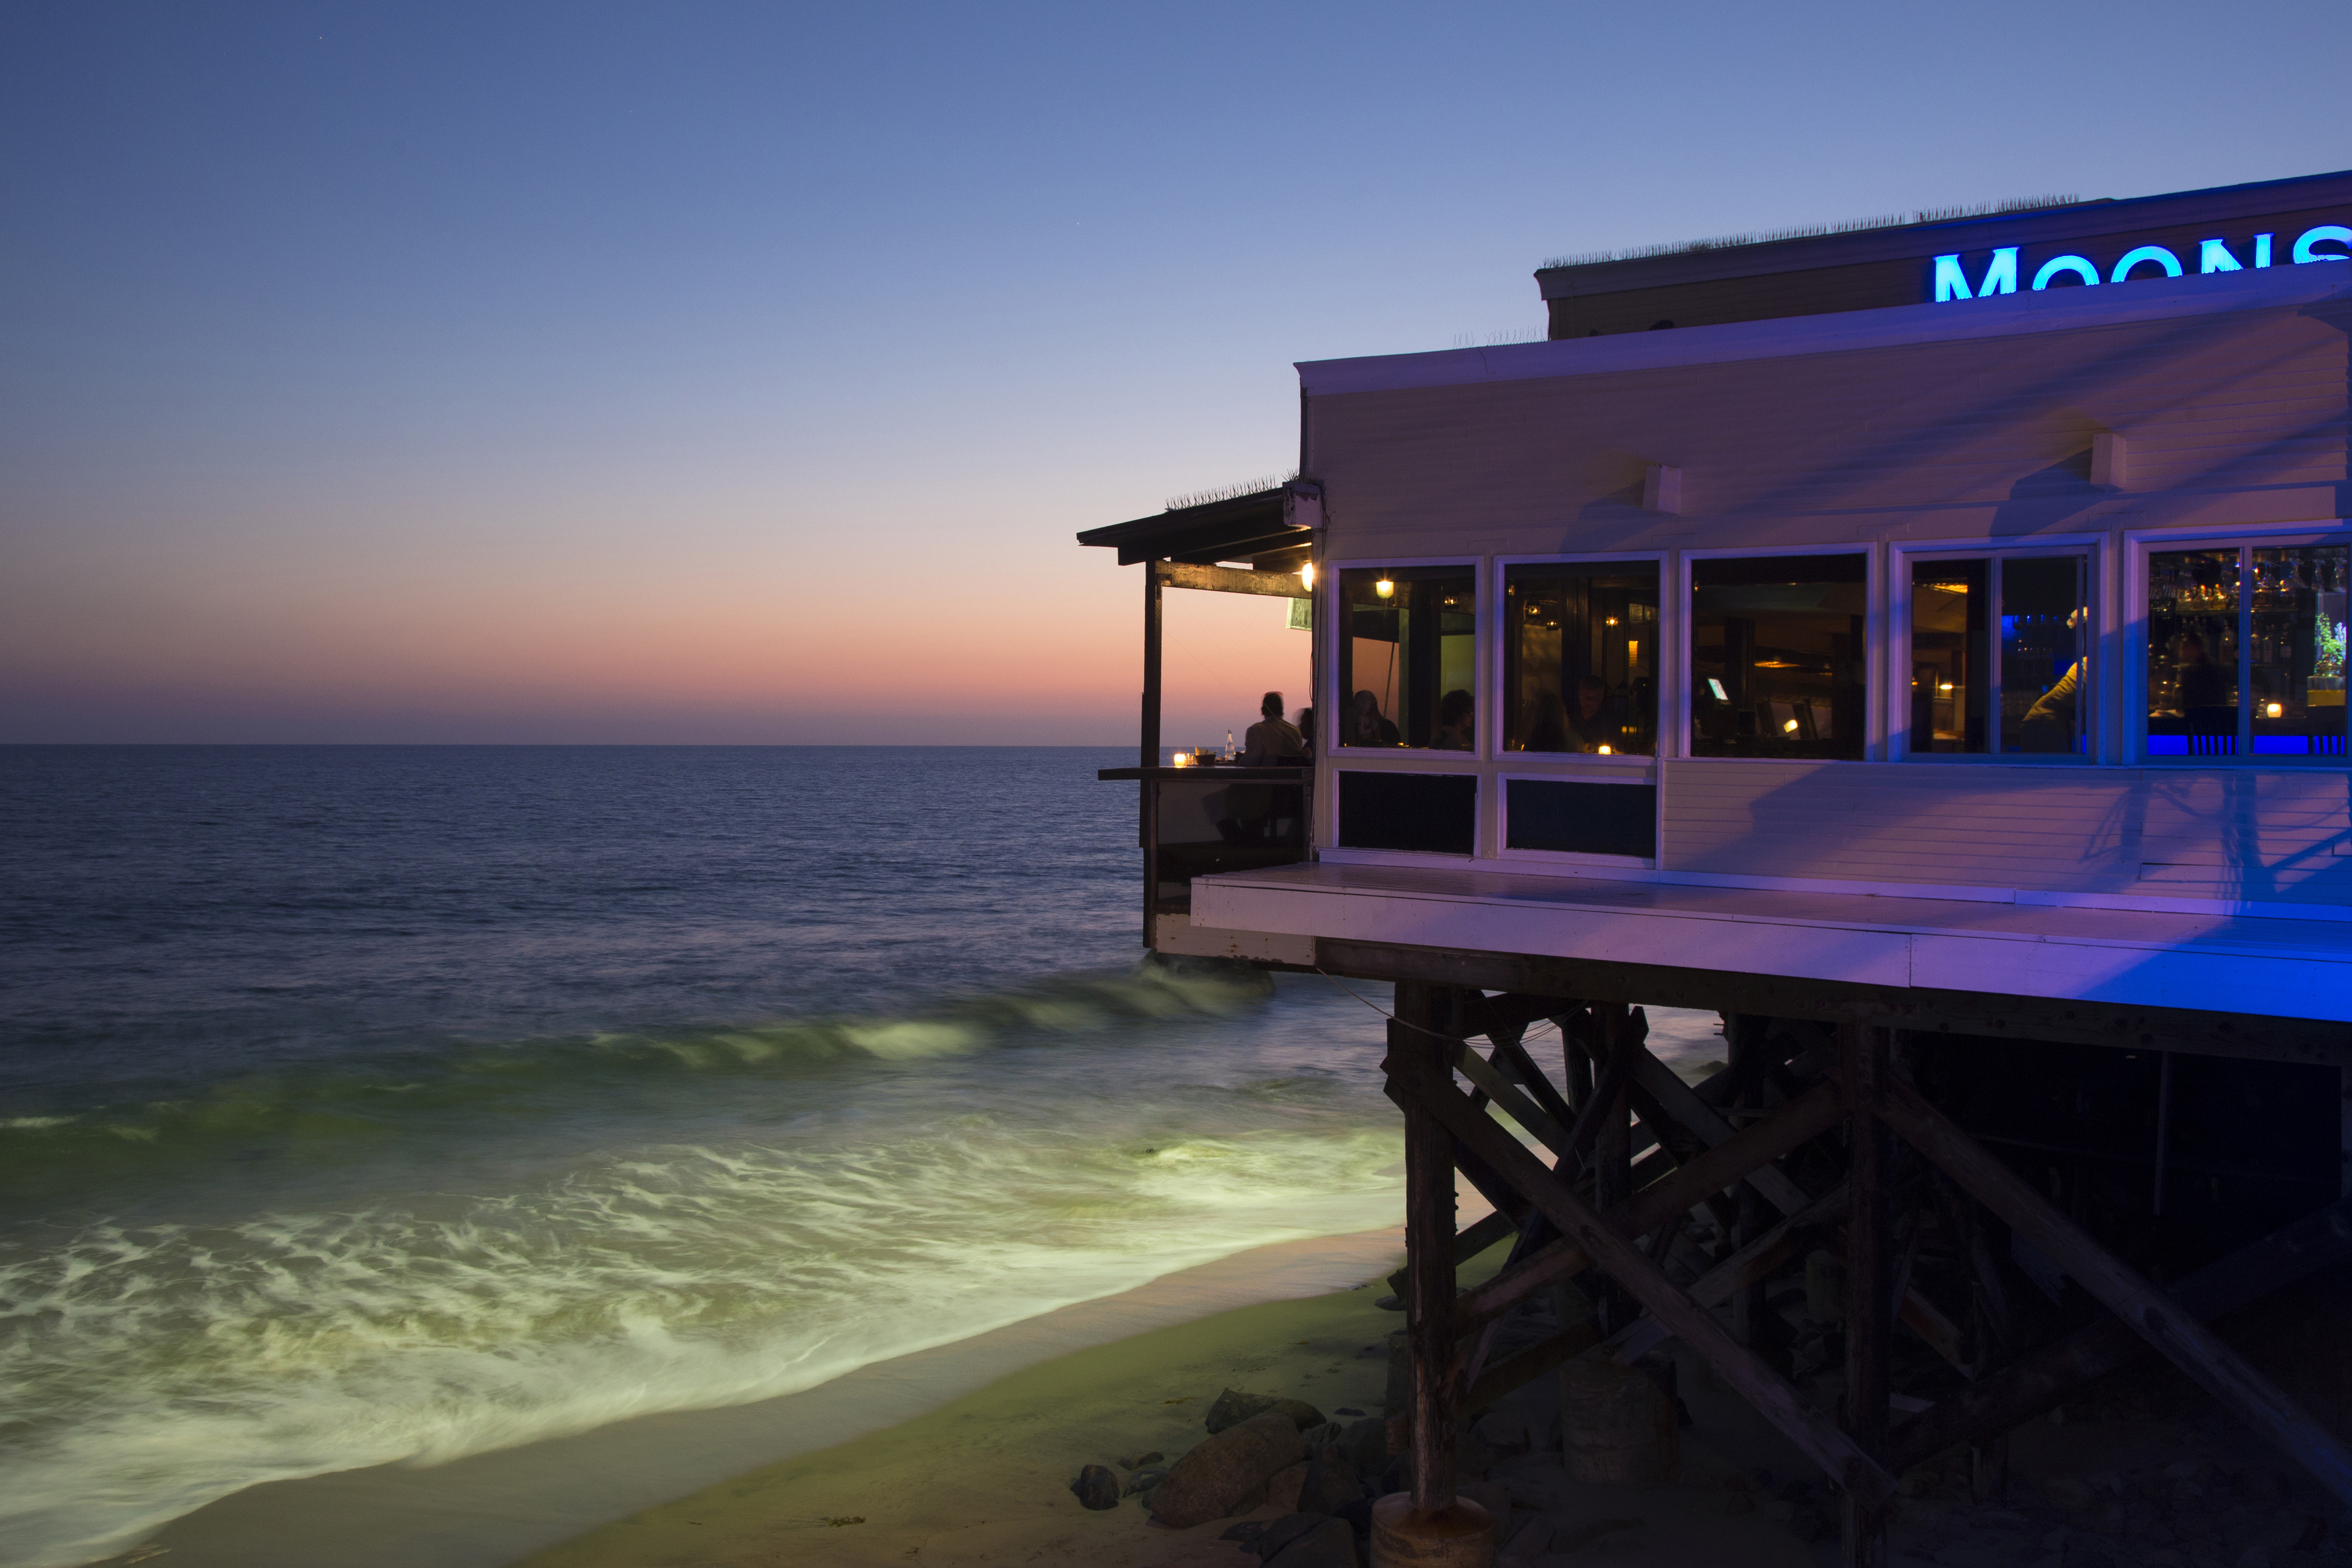 View of Ocean from Moonshadows Restaurant at dusk, Malibu, California, USA